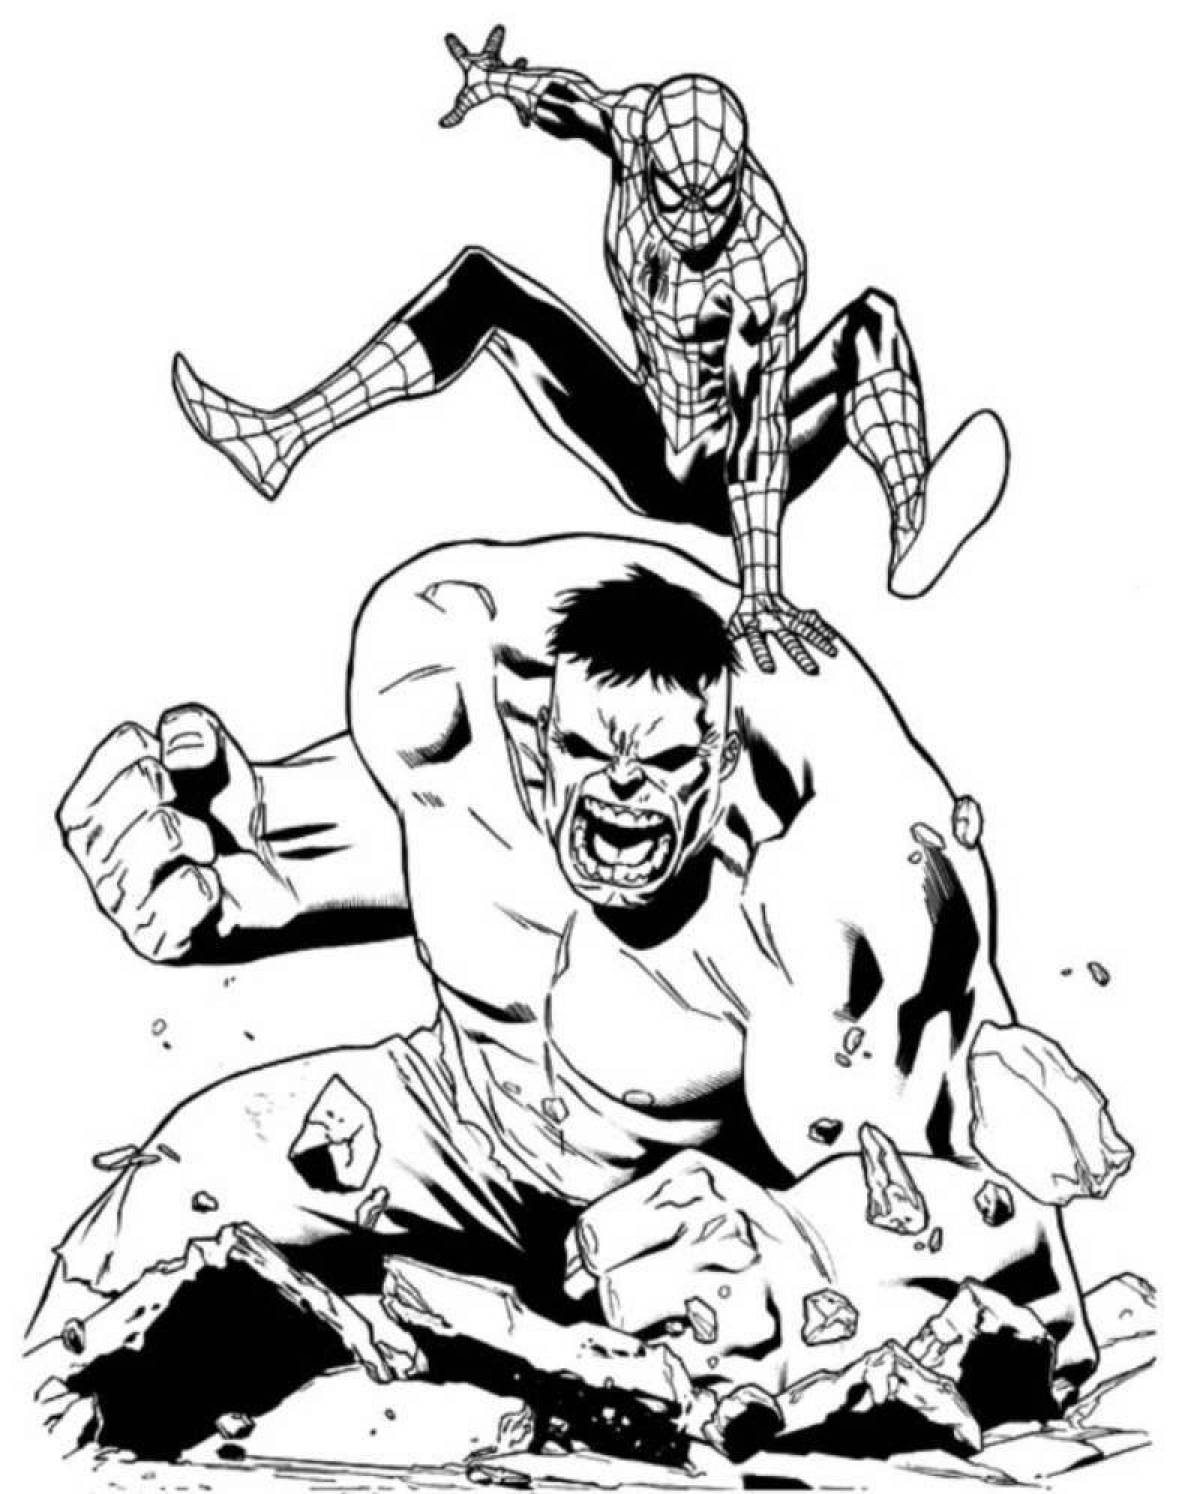 Rampant Hulk and Spiderman coloring page